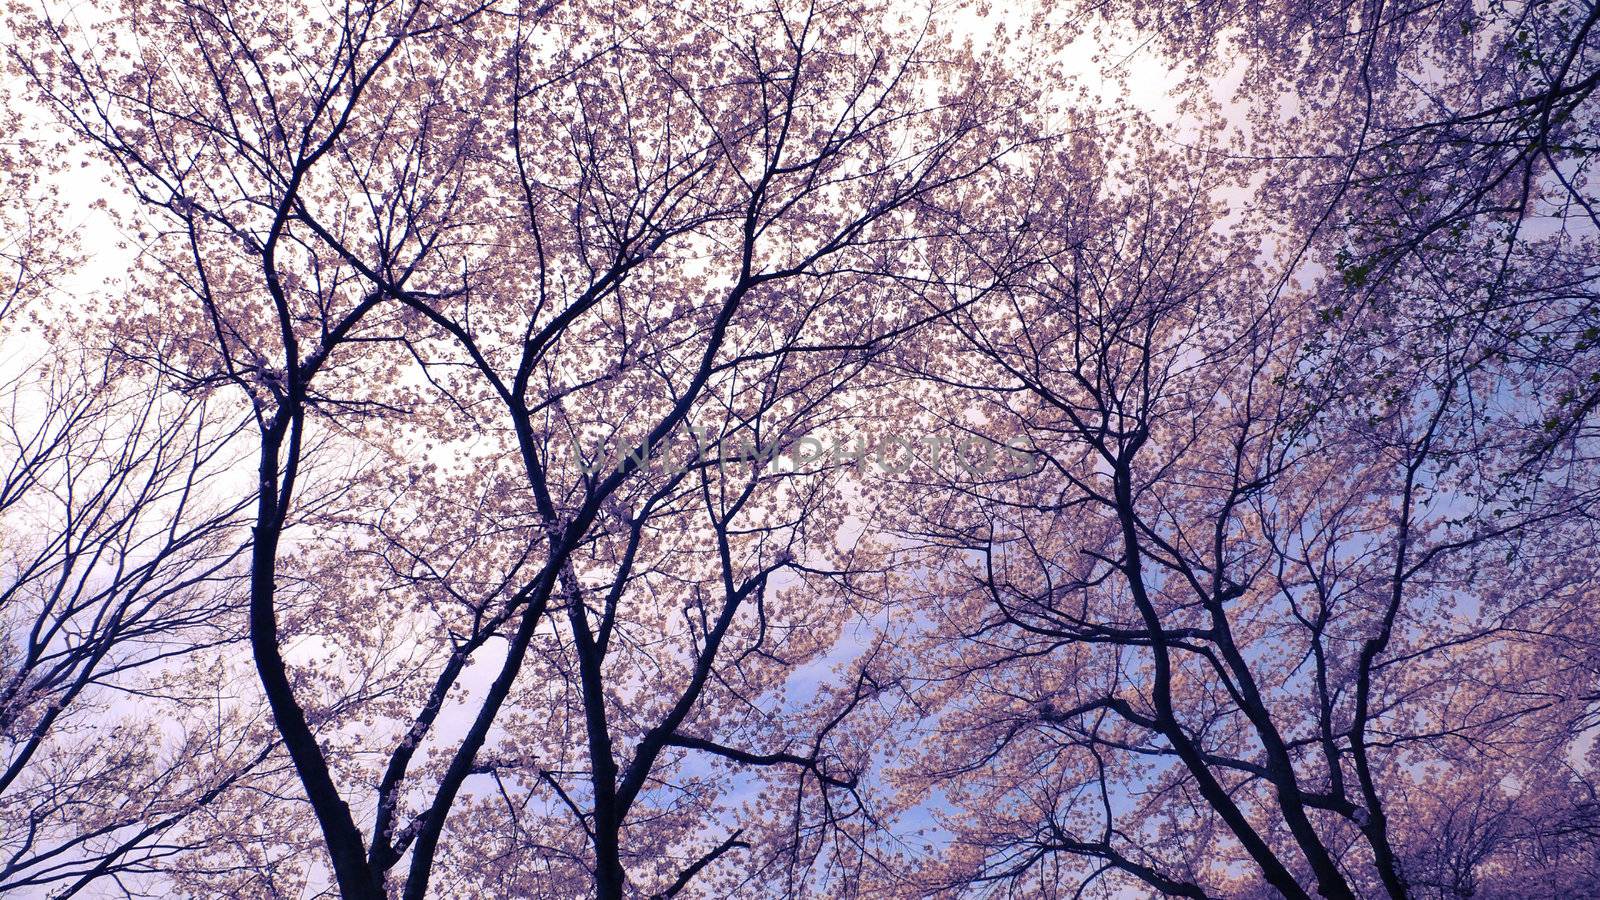 blossom cherries by yuriz